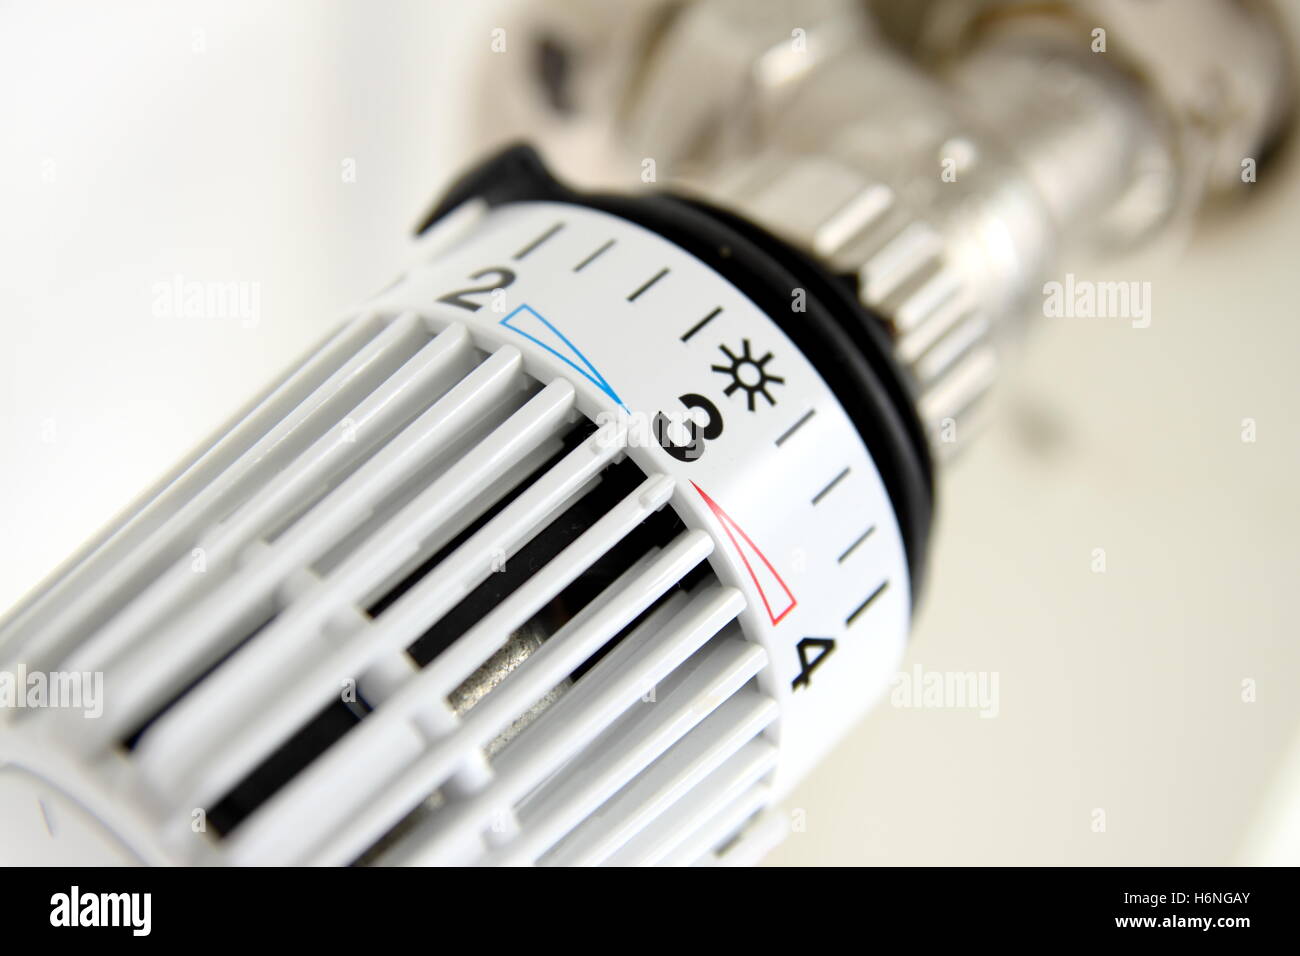 Heizungsregler - Thermostat Stockfotografie - Alamy